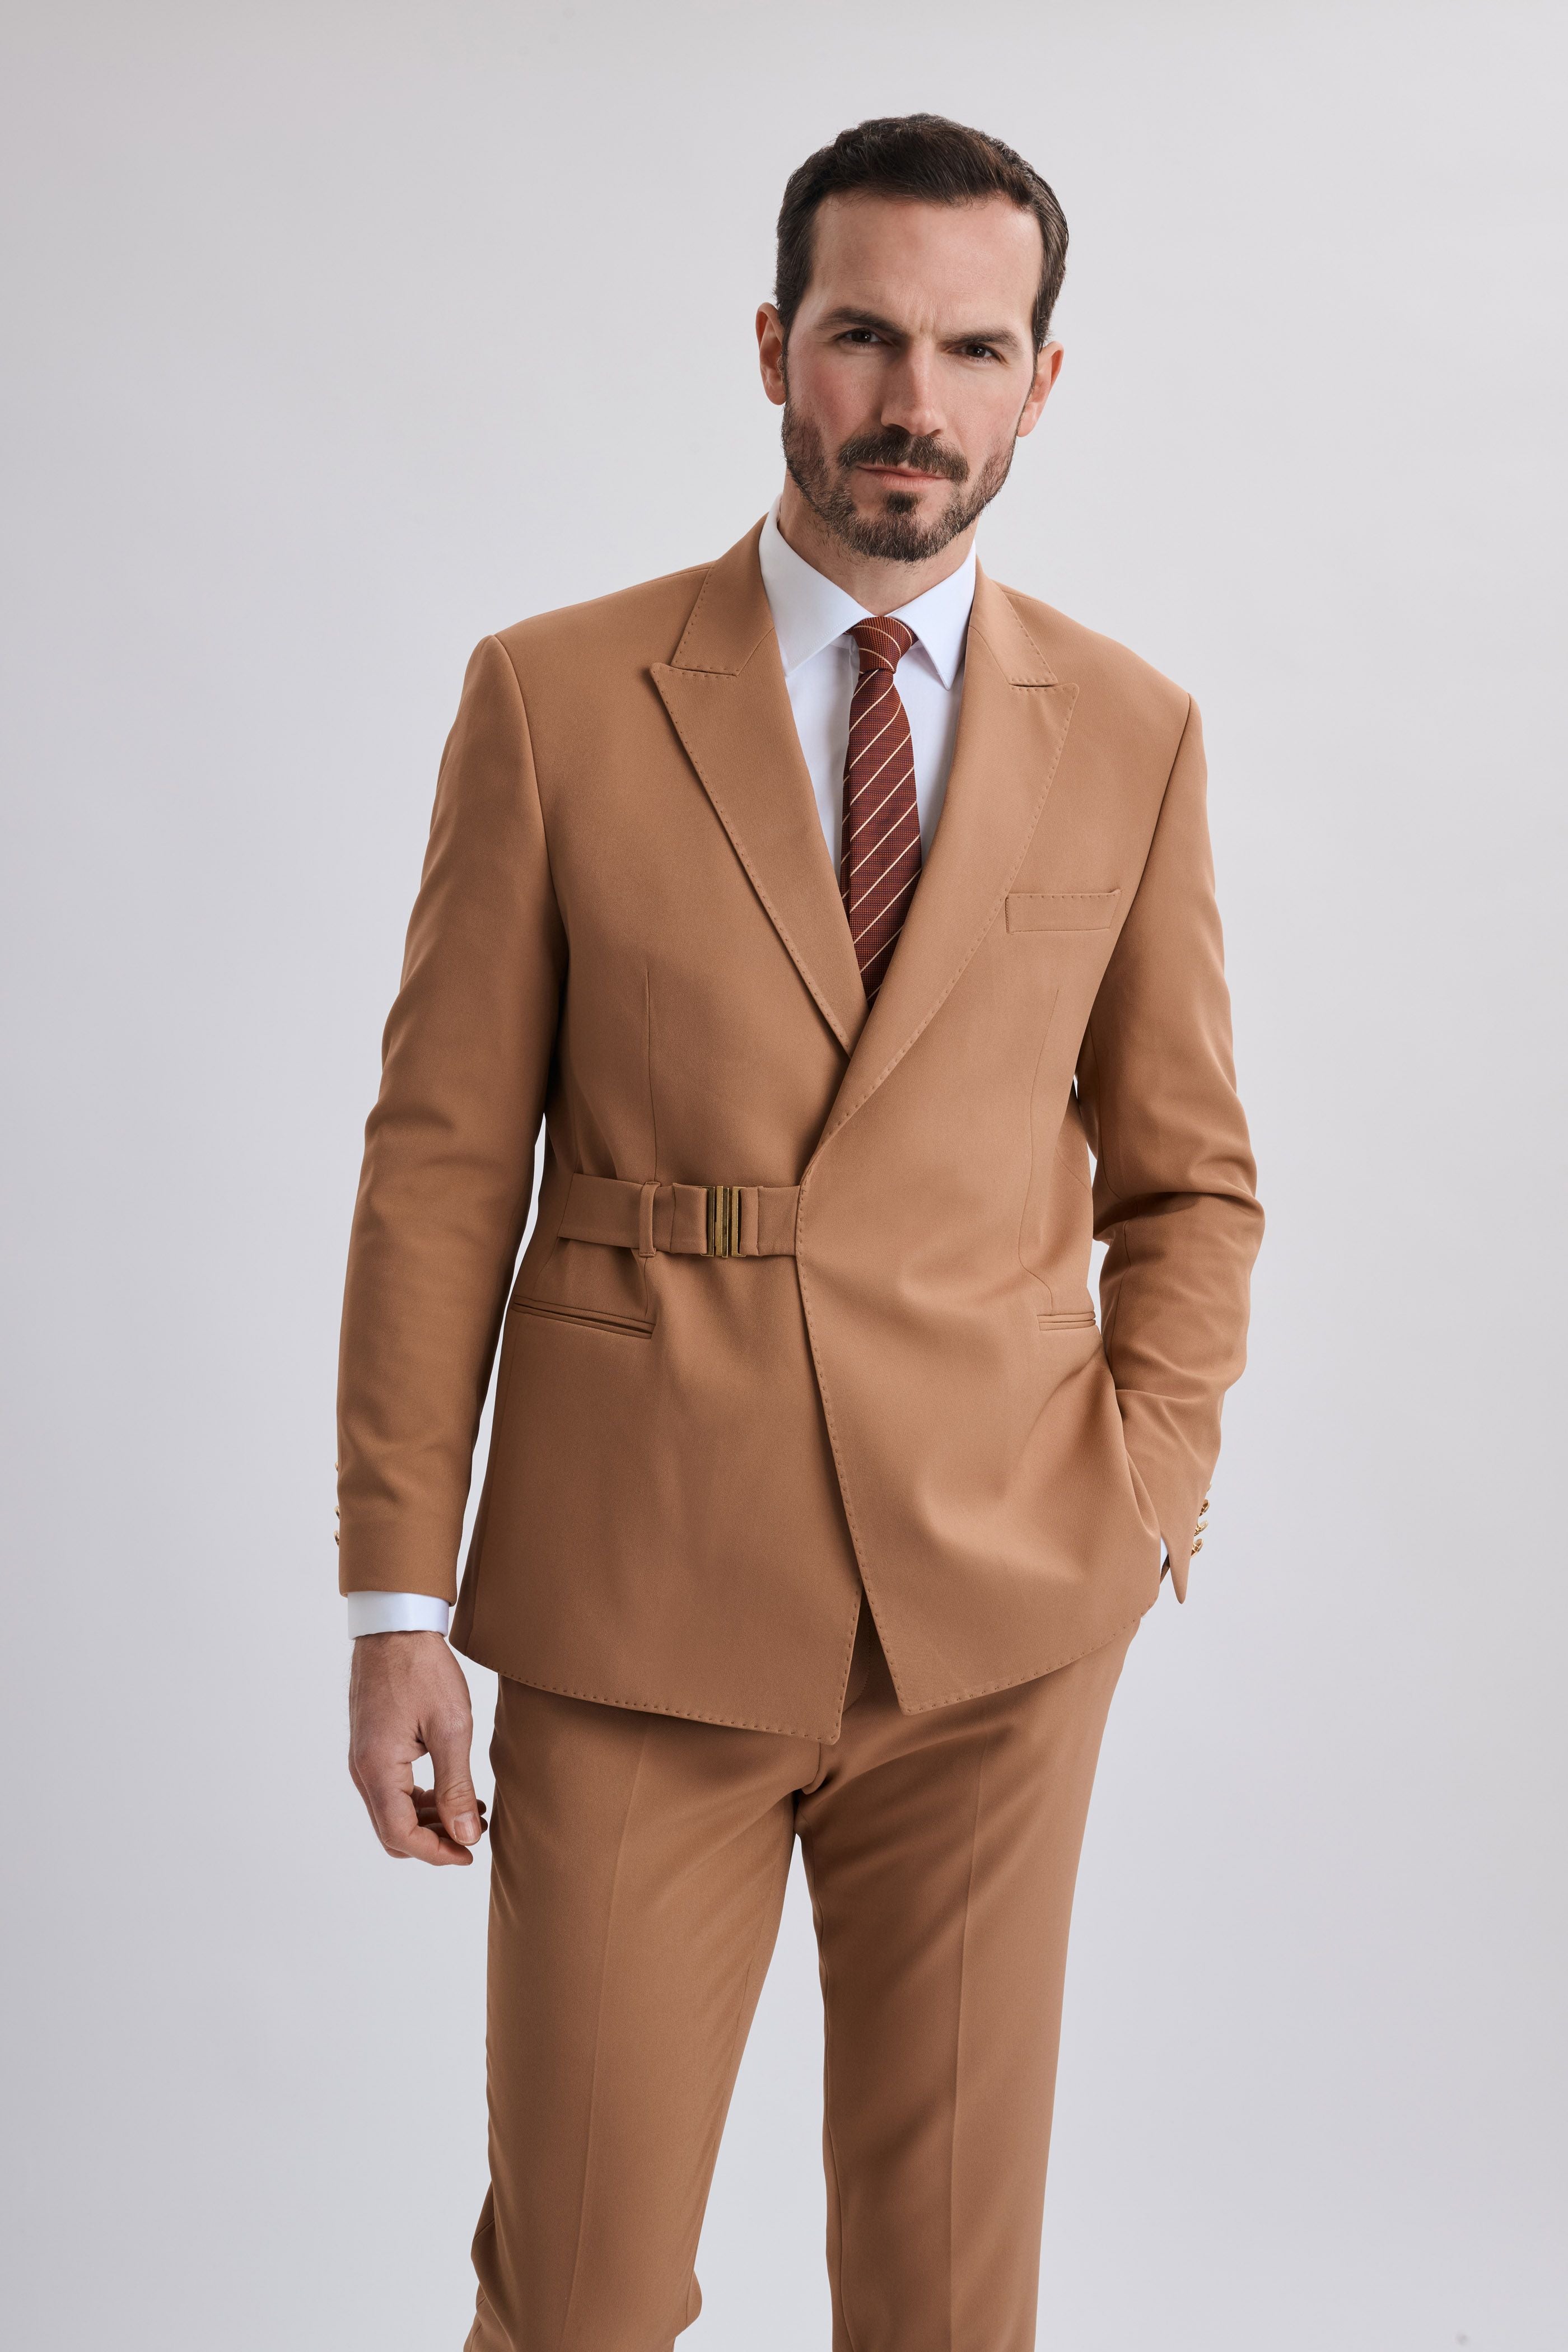 Riccardo Tan Two Piece Suit